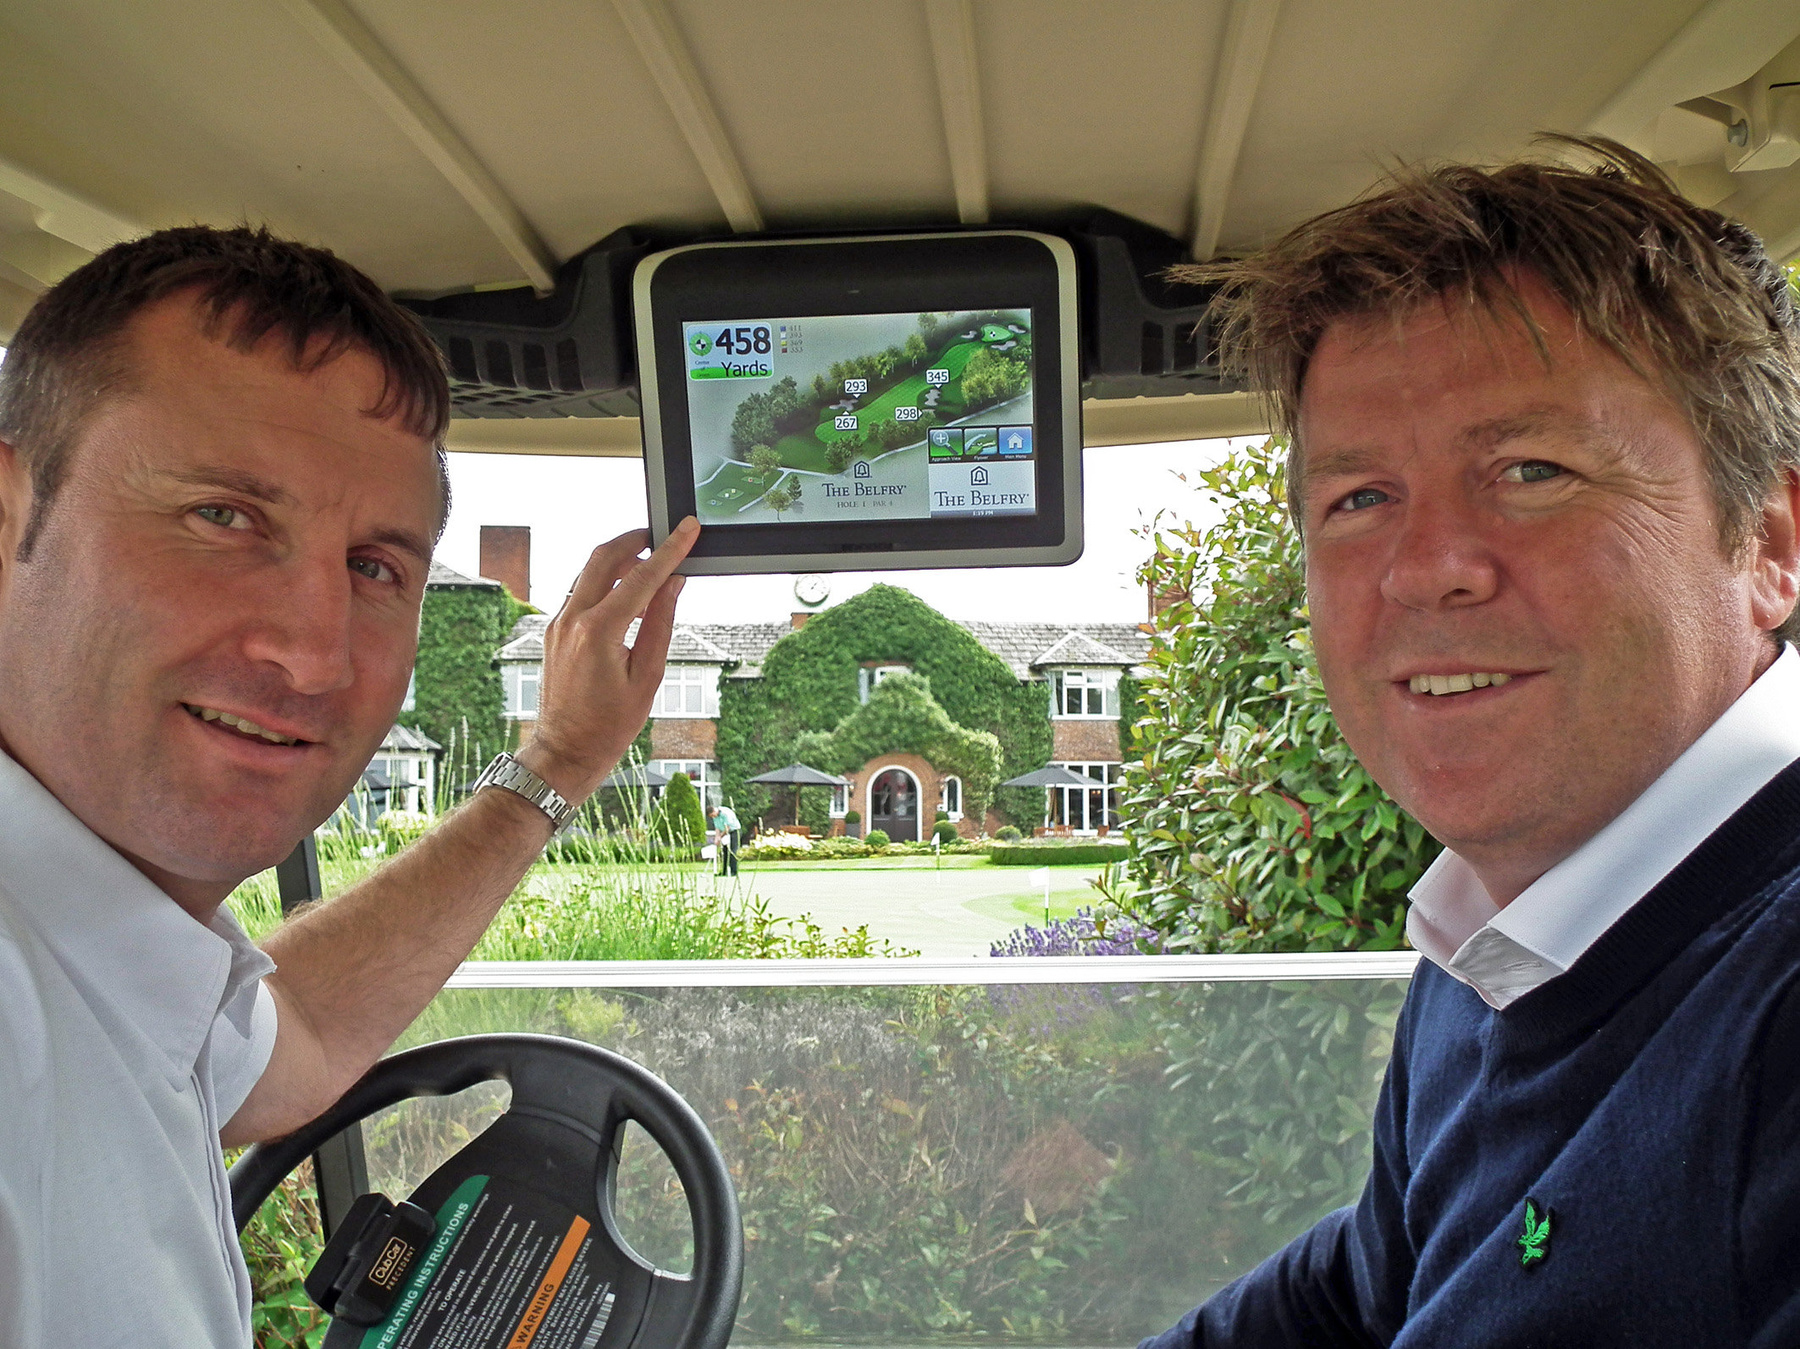 Golf Business News - Club Car Visage GPS system creates 'virtual